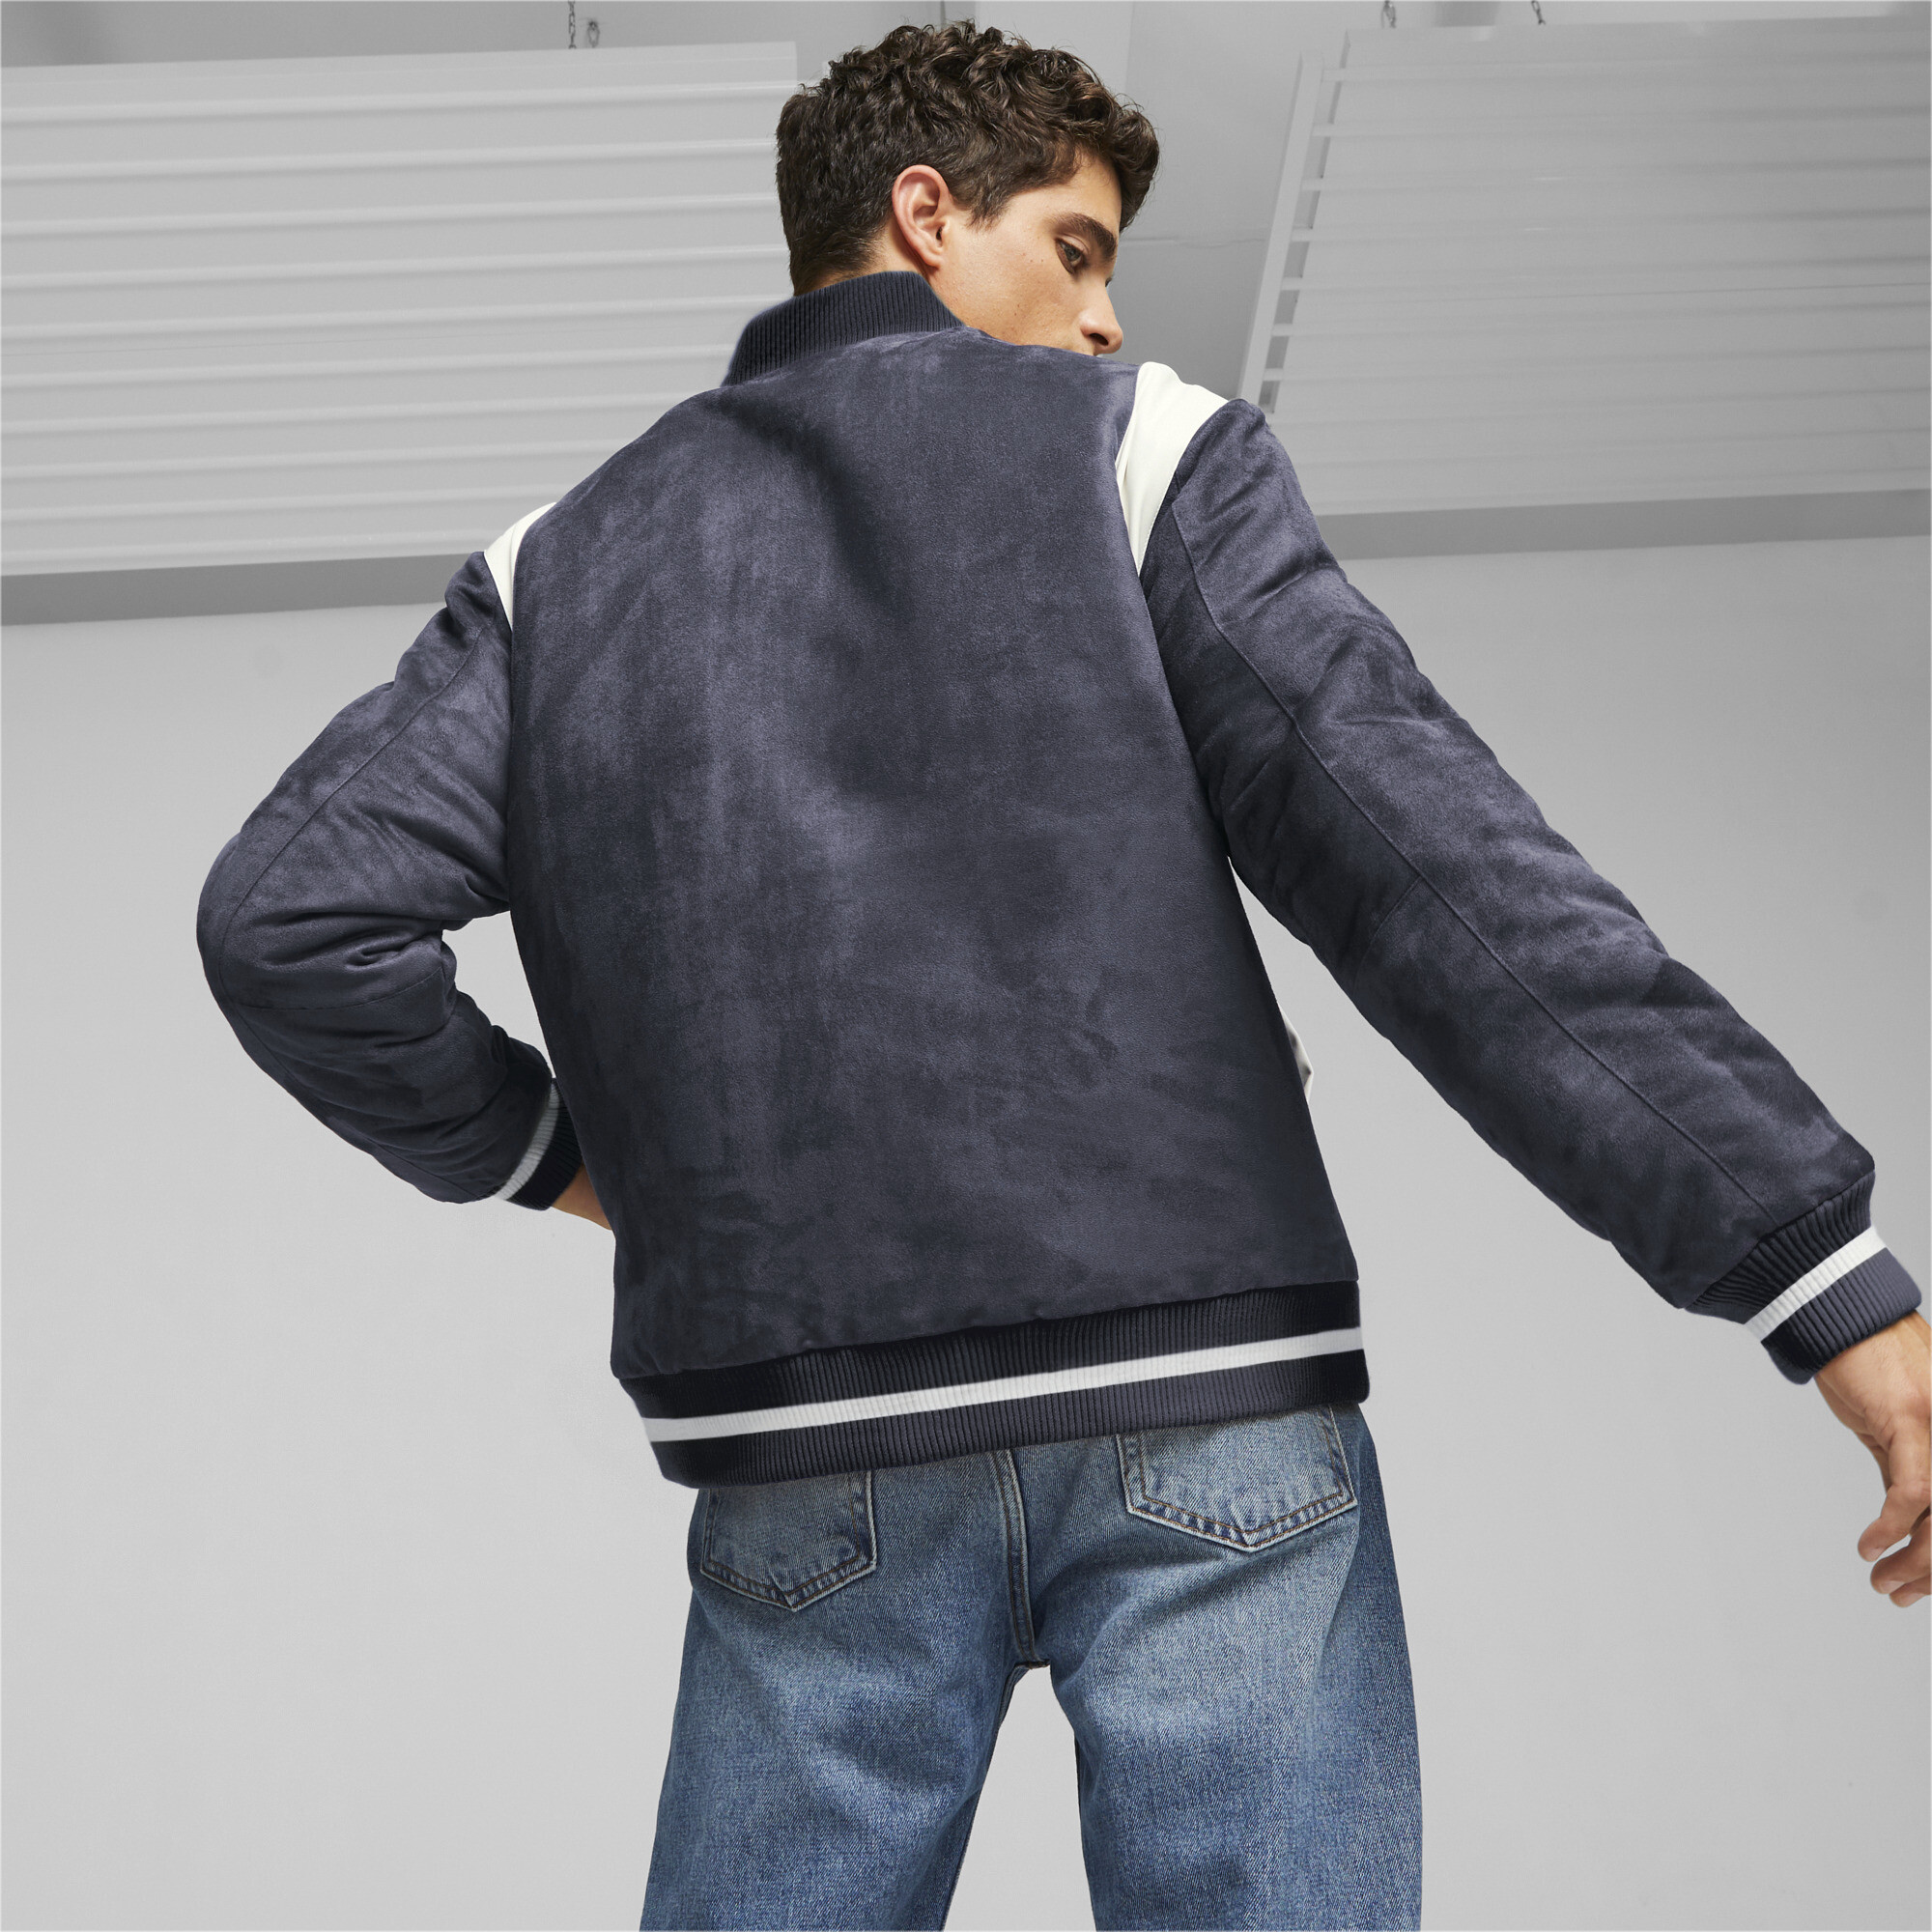 Men's PUMA X STAPLE Varisty Jacket In Blue, Size Large